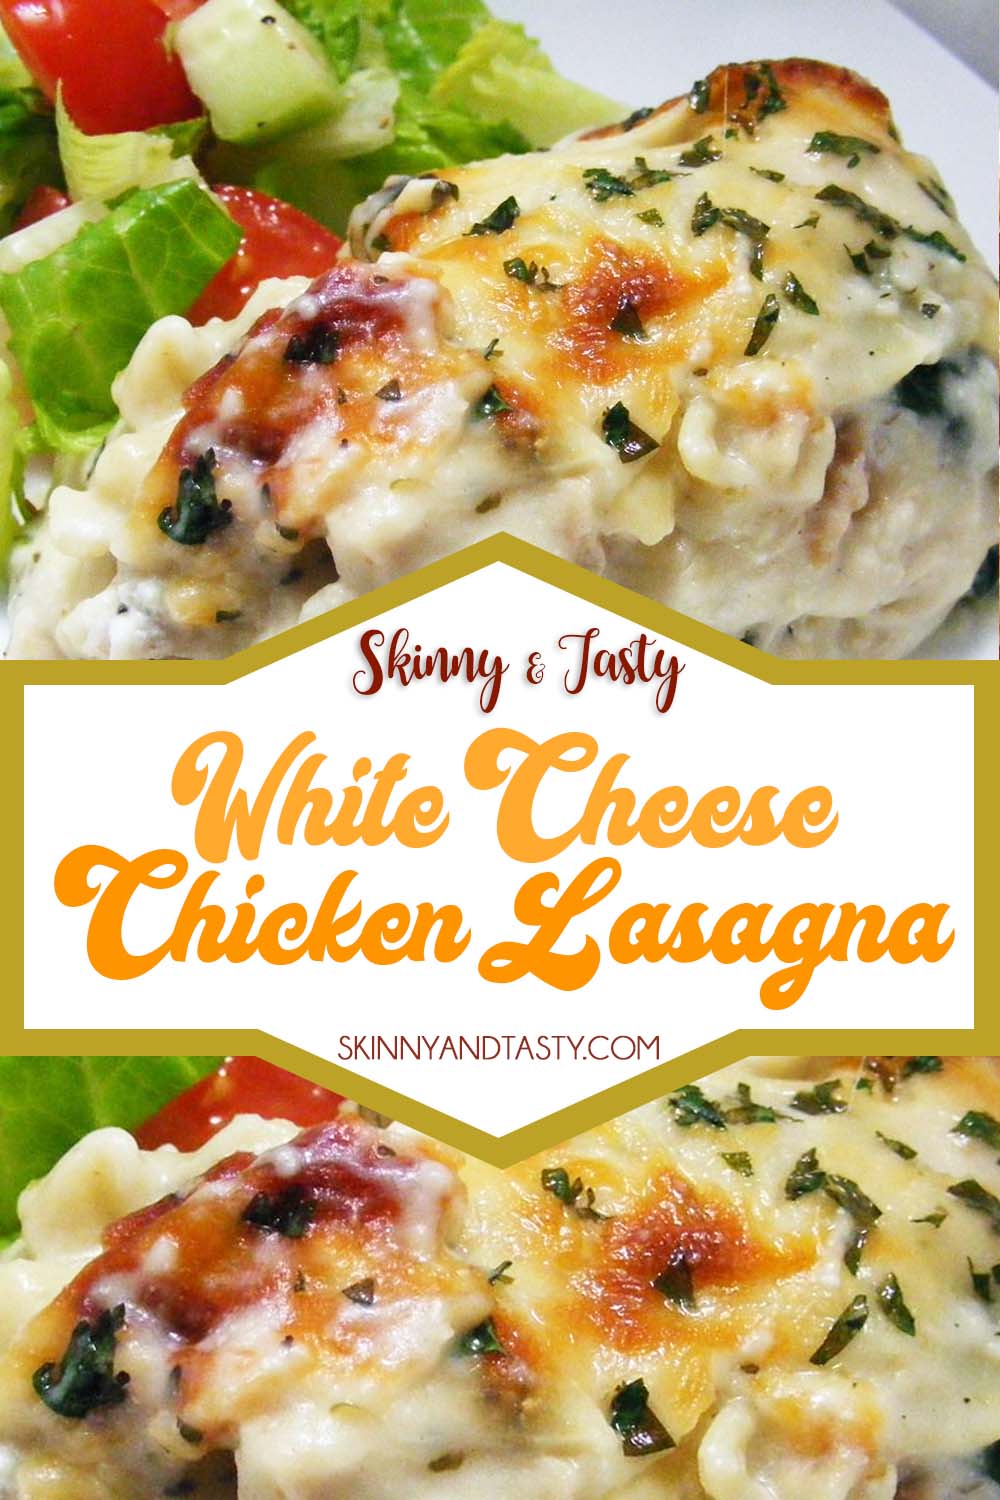 White Cheese Chicken Lasagna Recipe